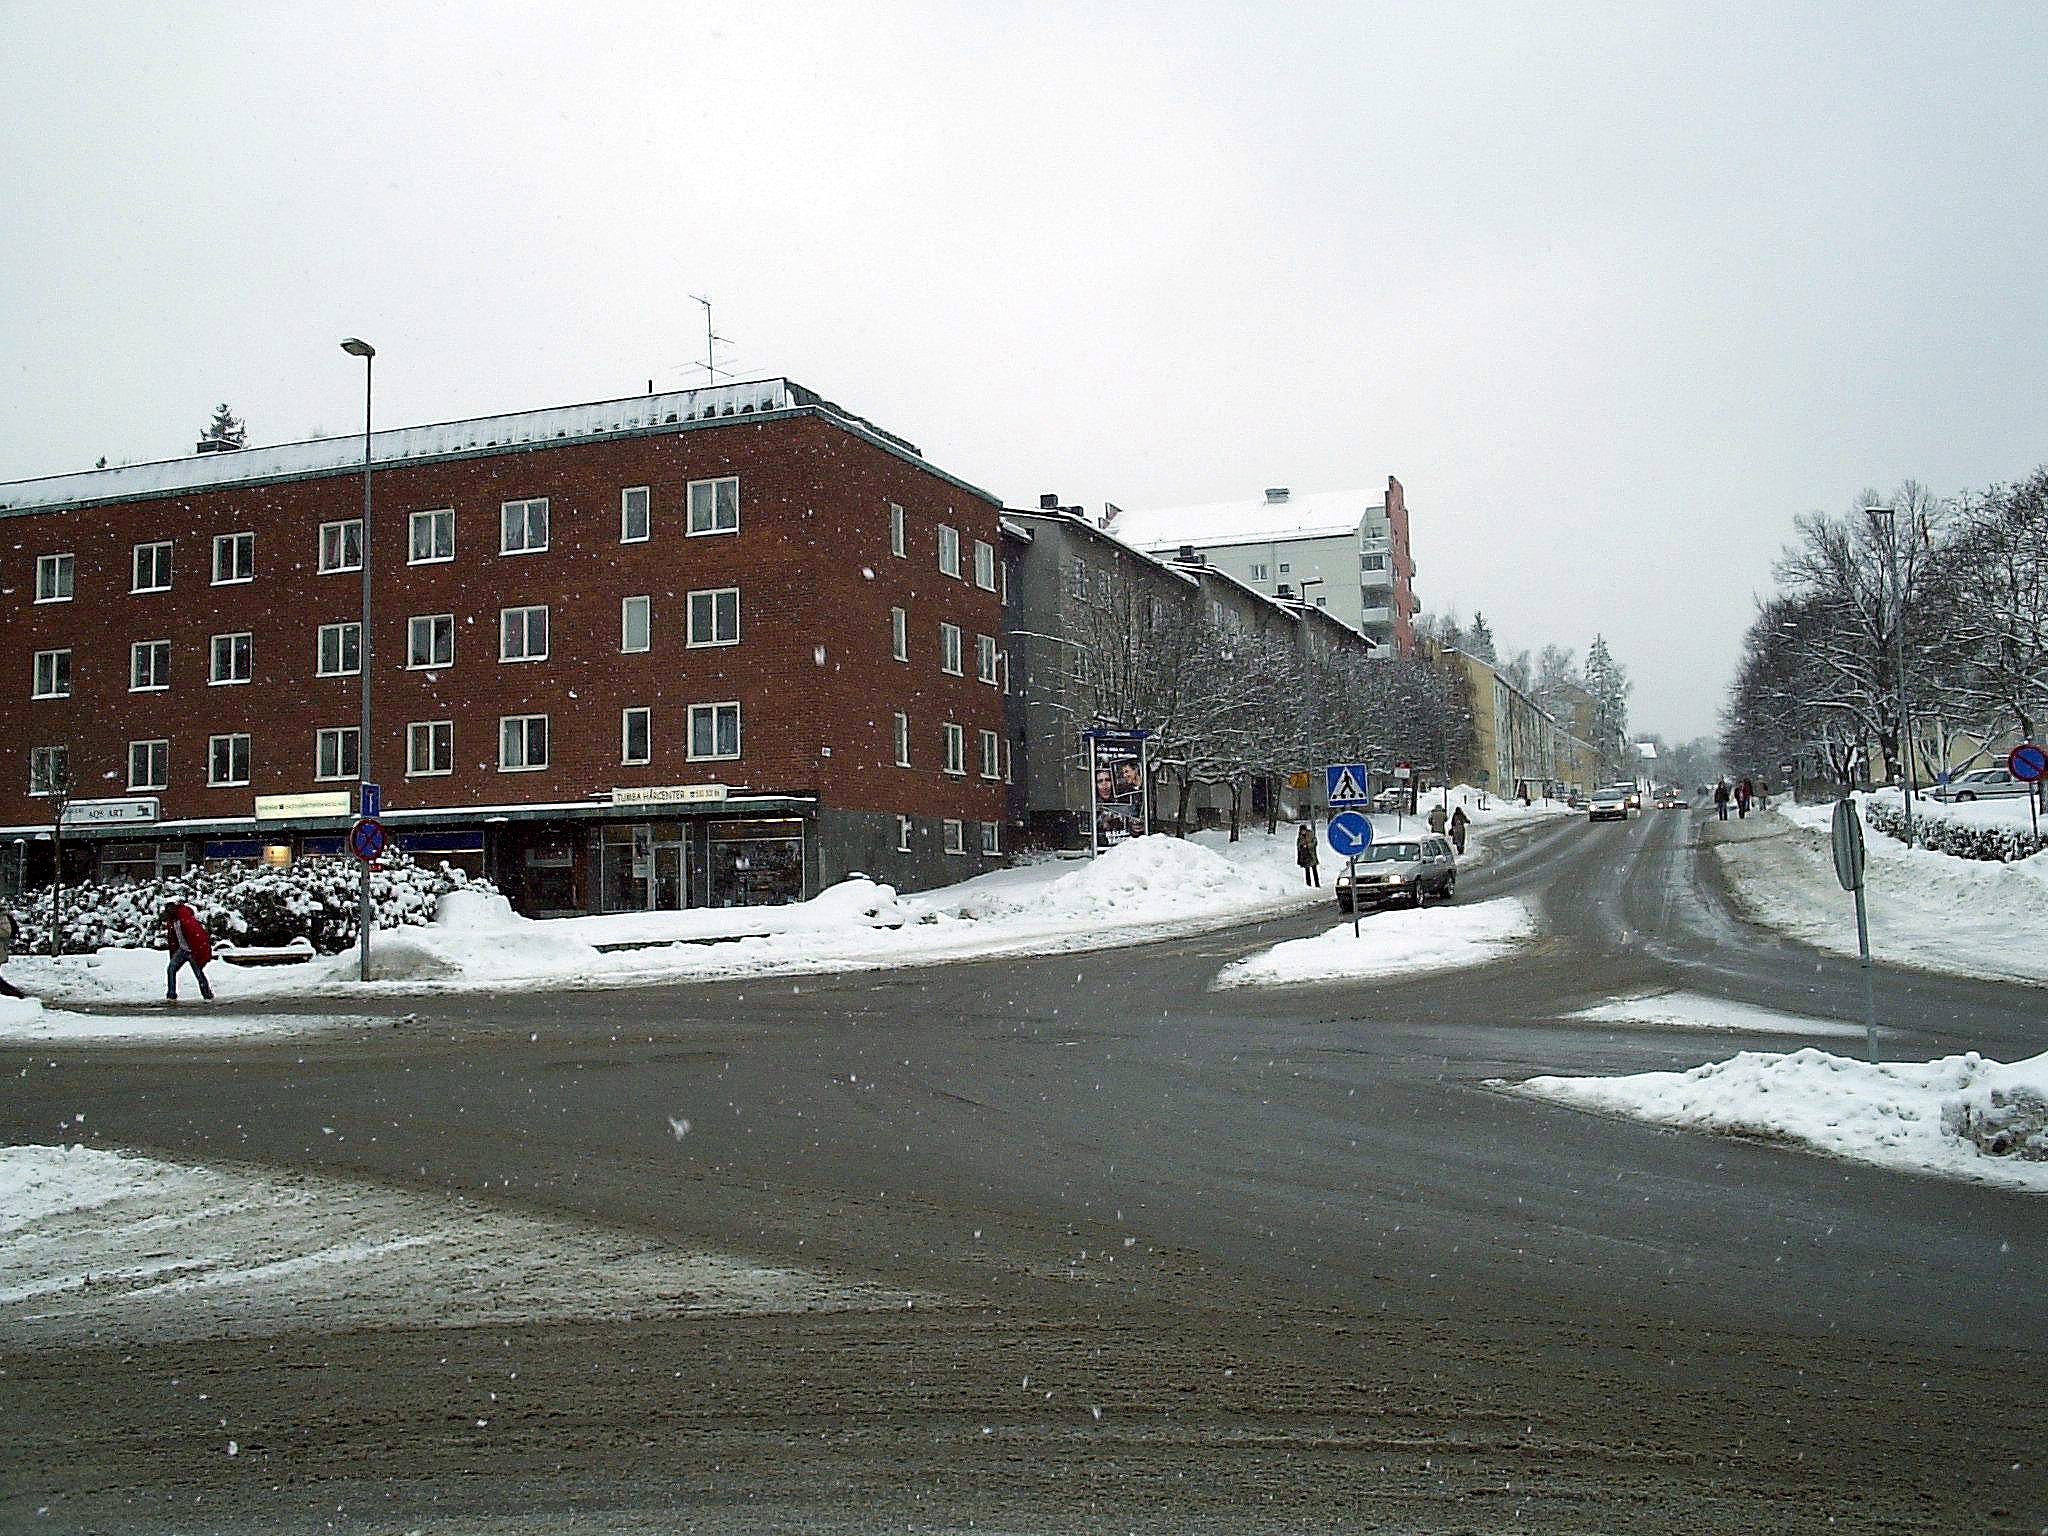 Tumba, Szwecja